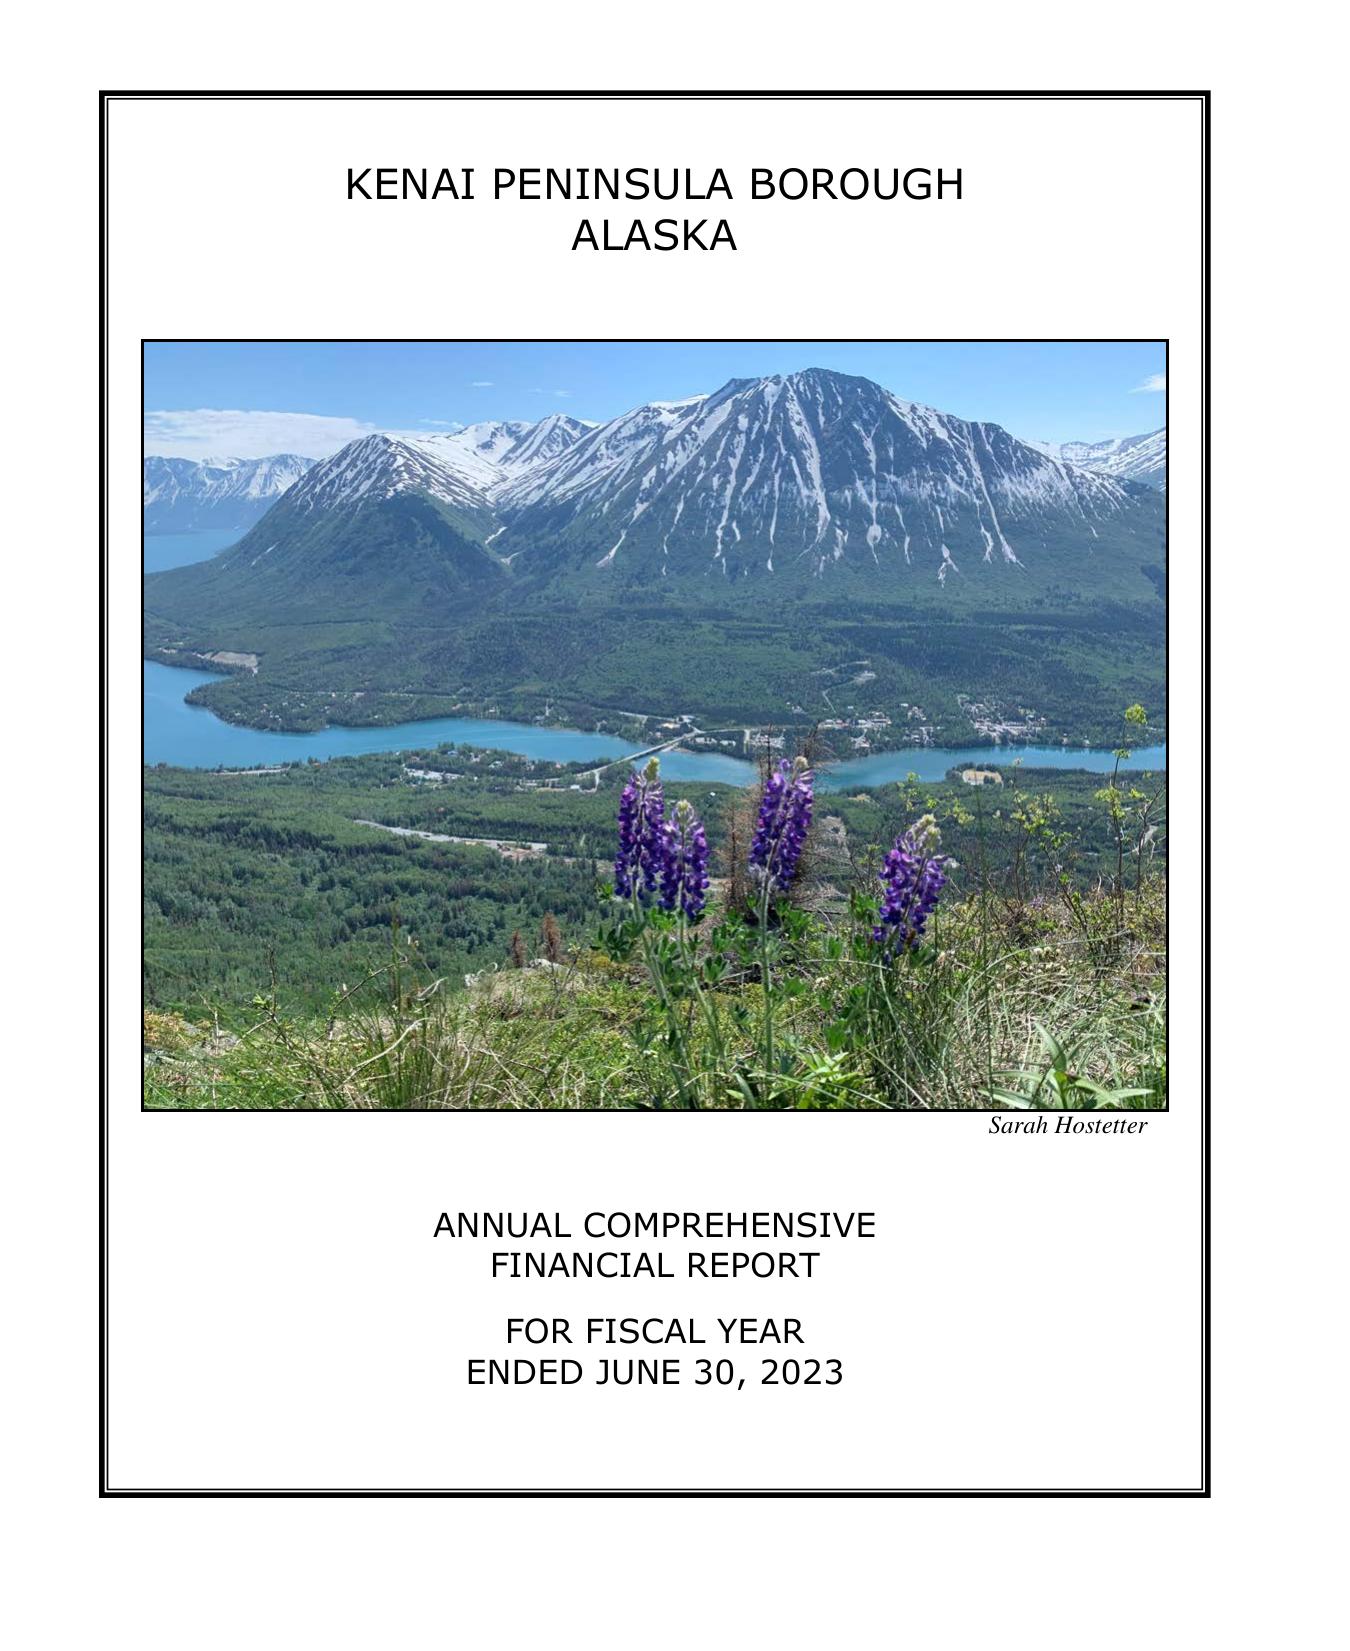 KPB 2023 Annual Report